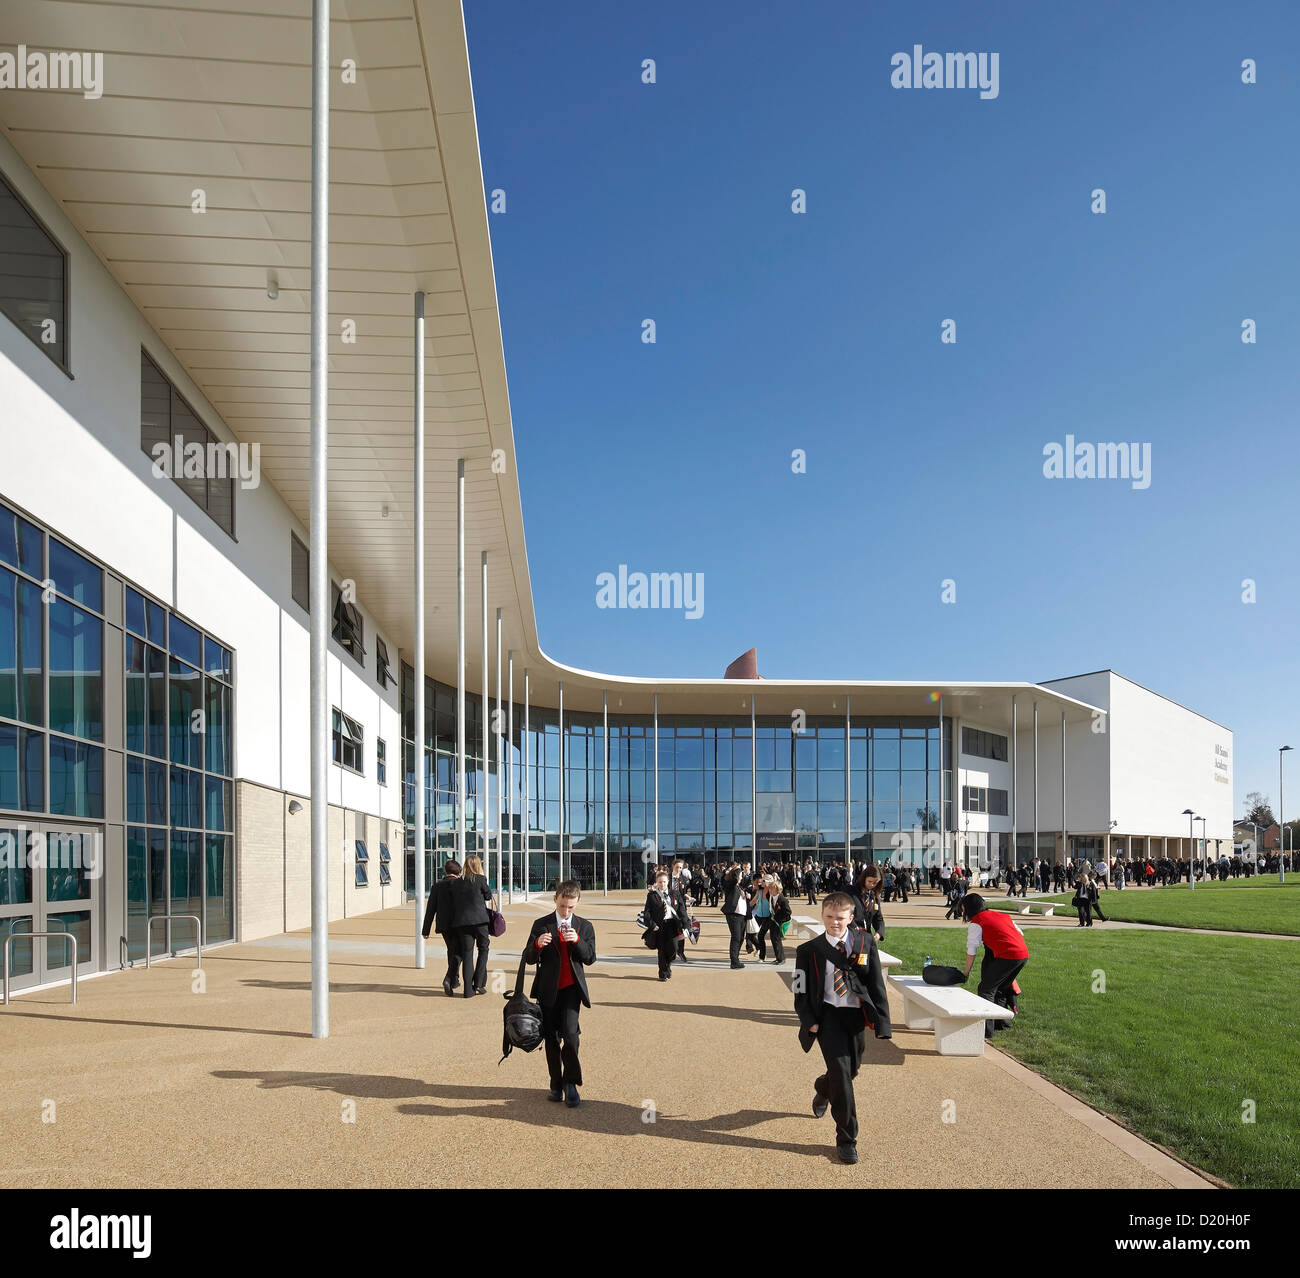 All Saints Academy, Chelteham, United Kingdom. Architect: Nicholas Hare Architects LLP, 2012. Canopied main entrance. Stock Photo